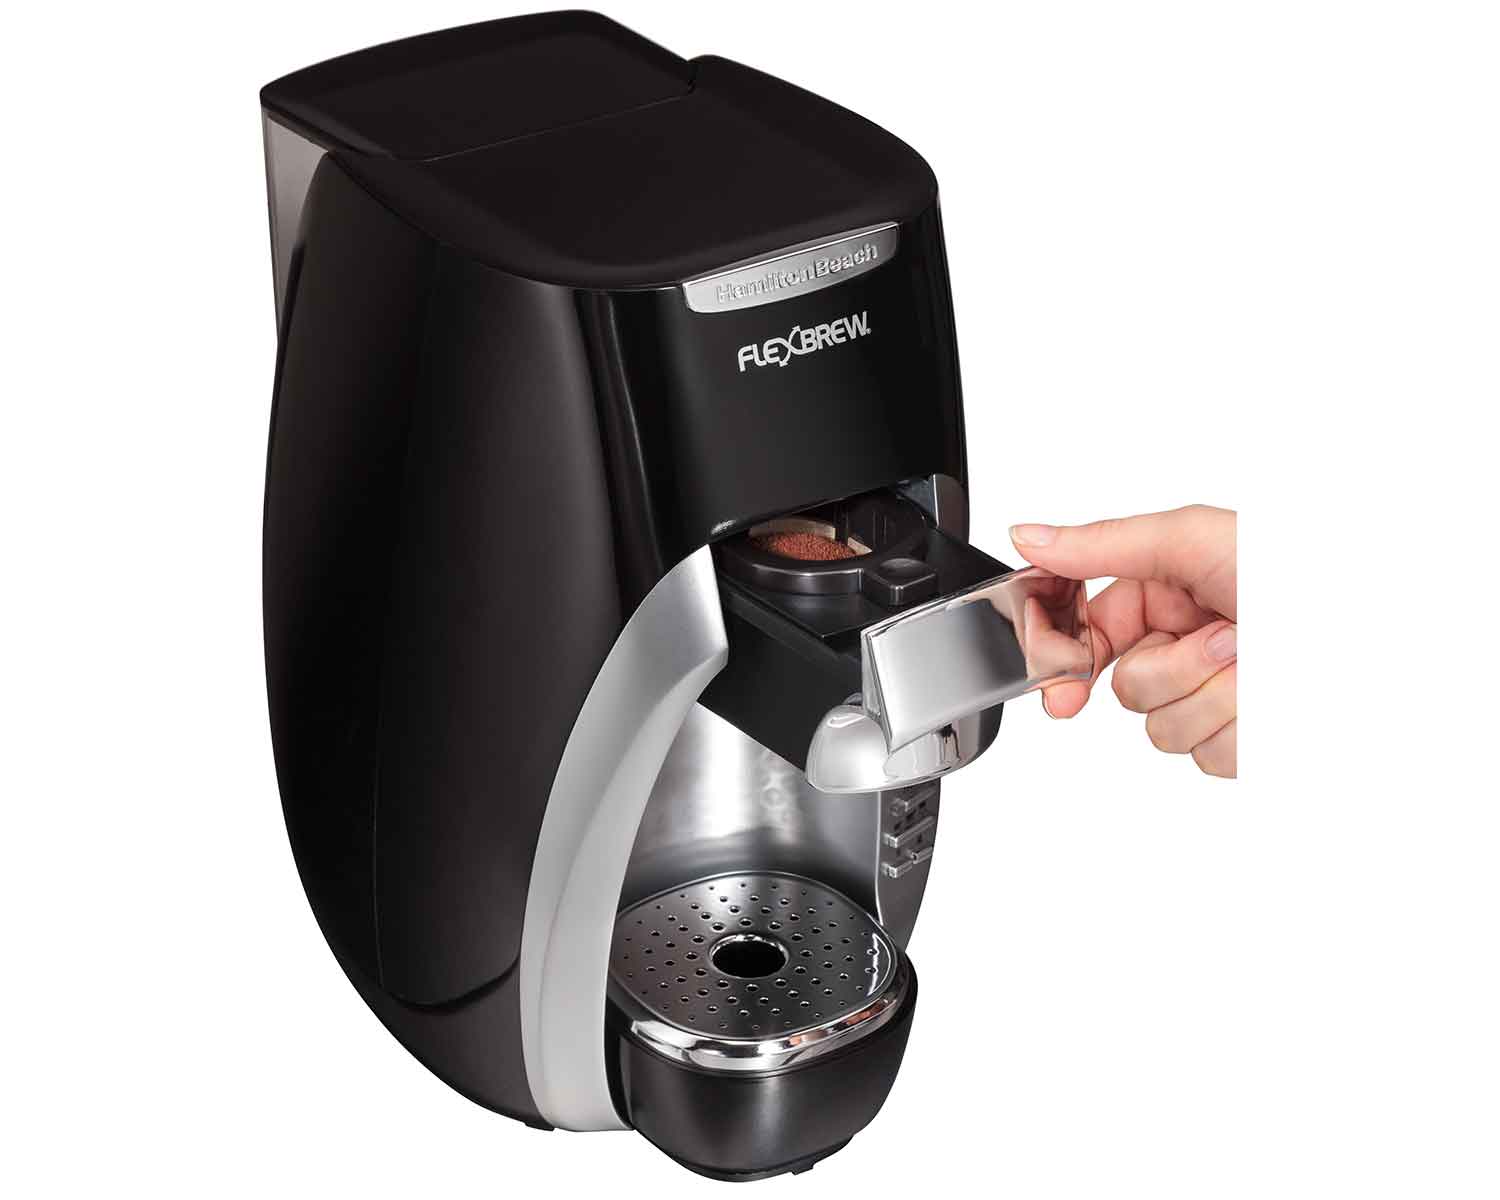 FlexBrew® Single-Serve Coffeemaker